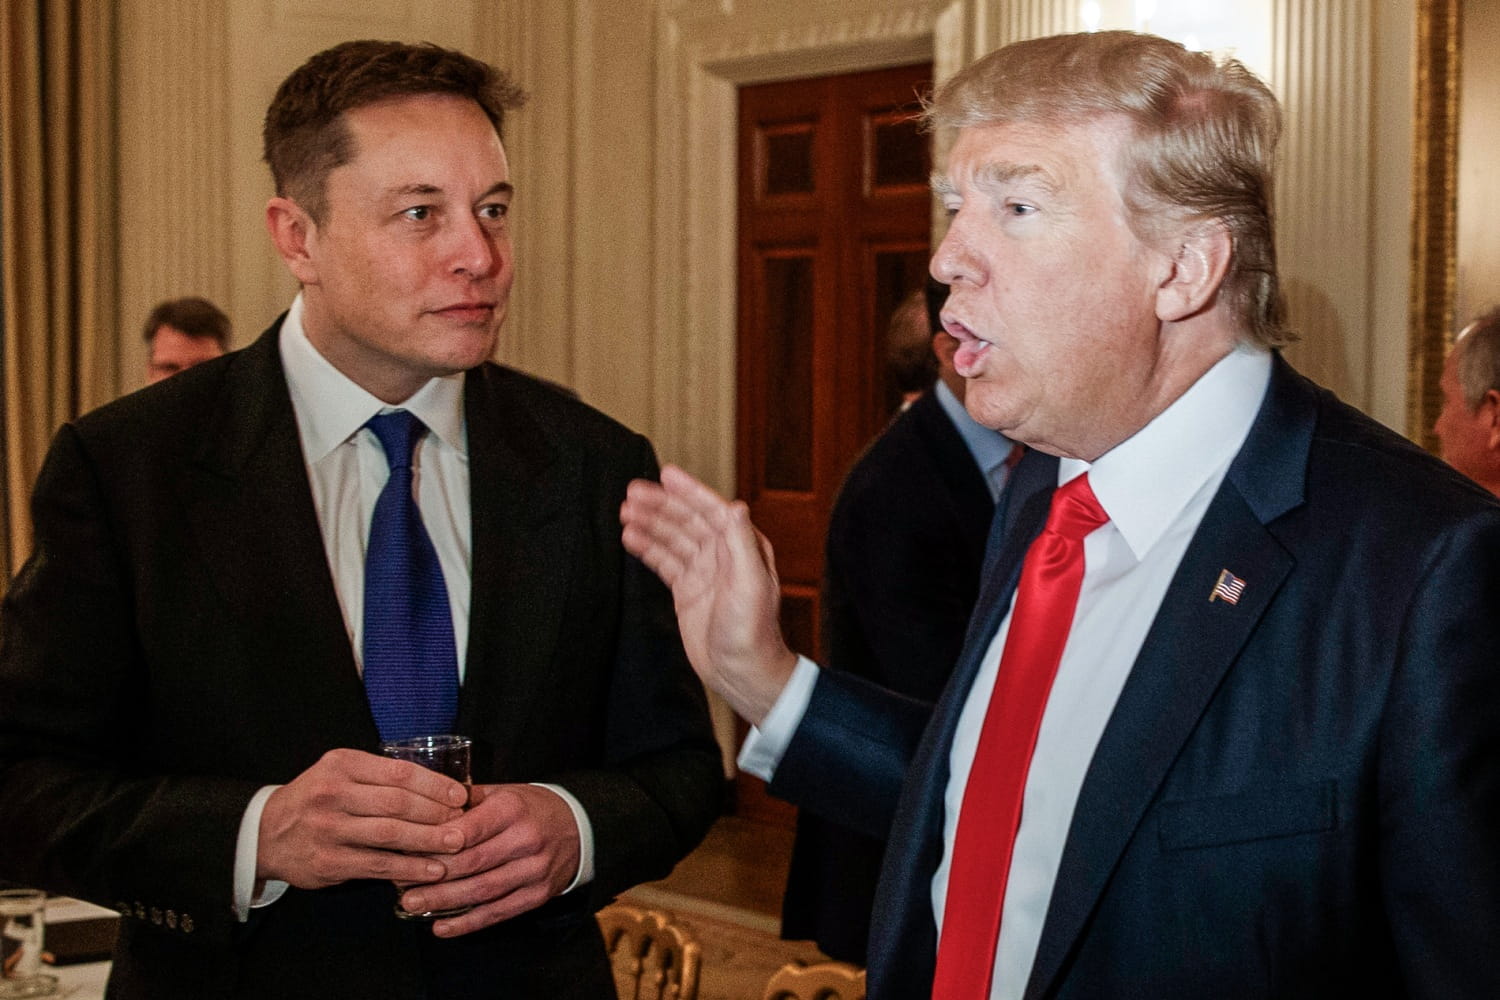 Elon Musk and Donald Trump Forge Unlikely Alliance Amidst Political Turmoil